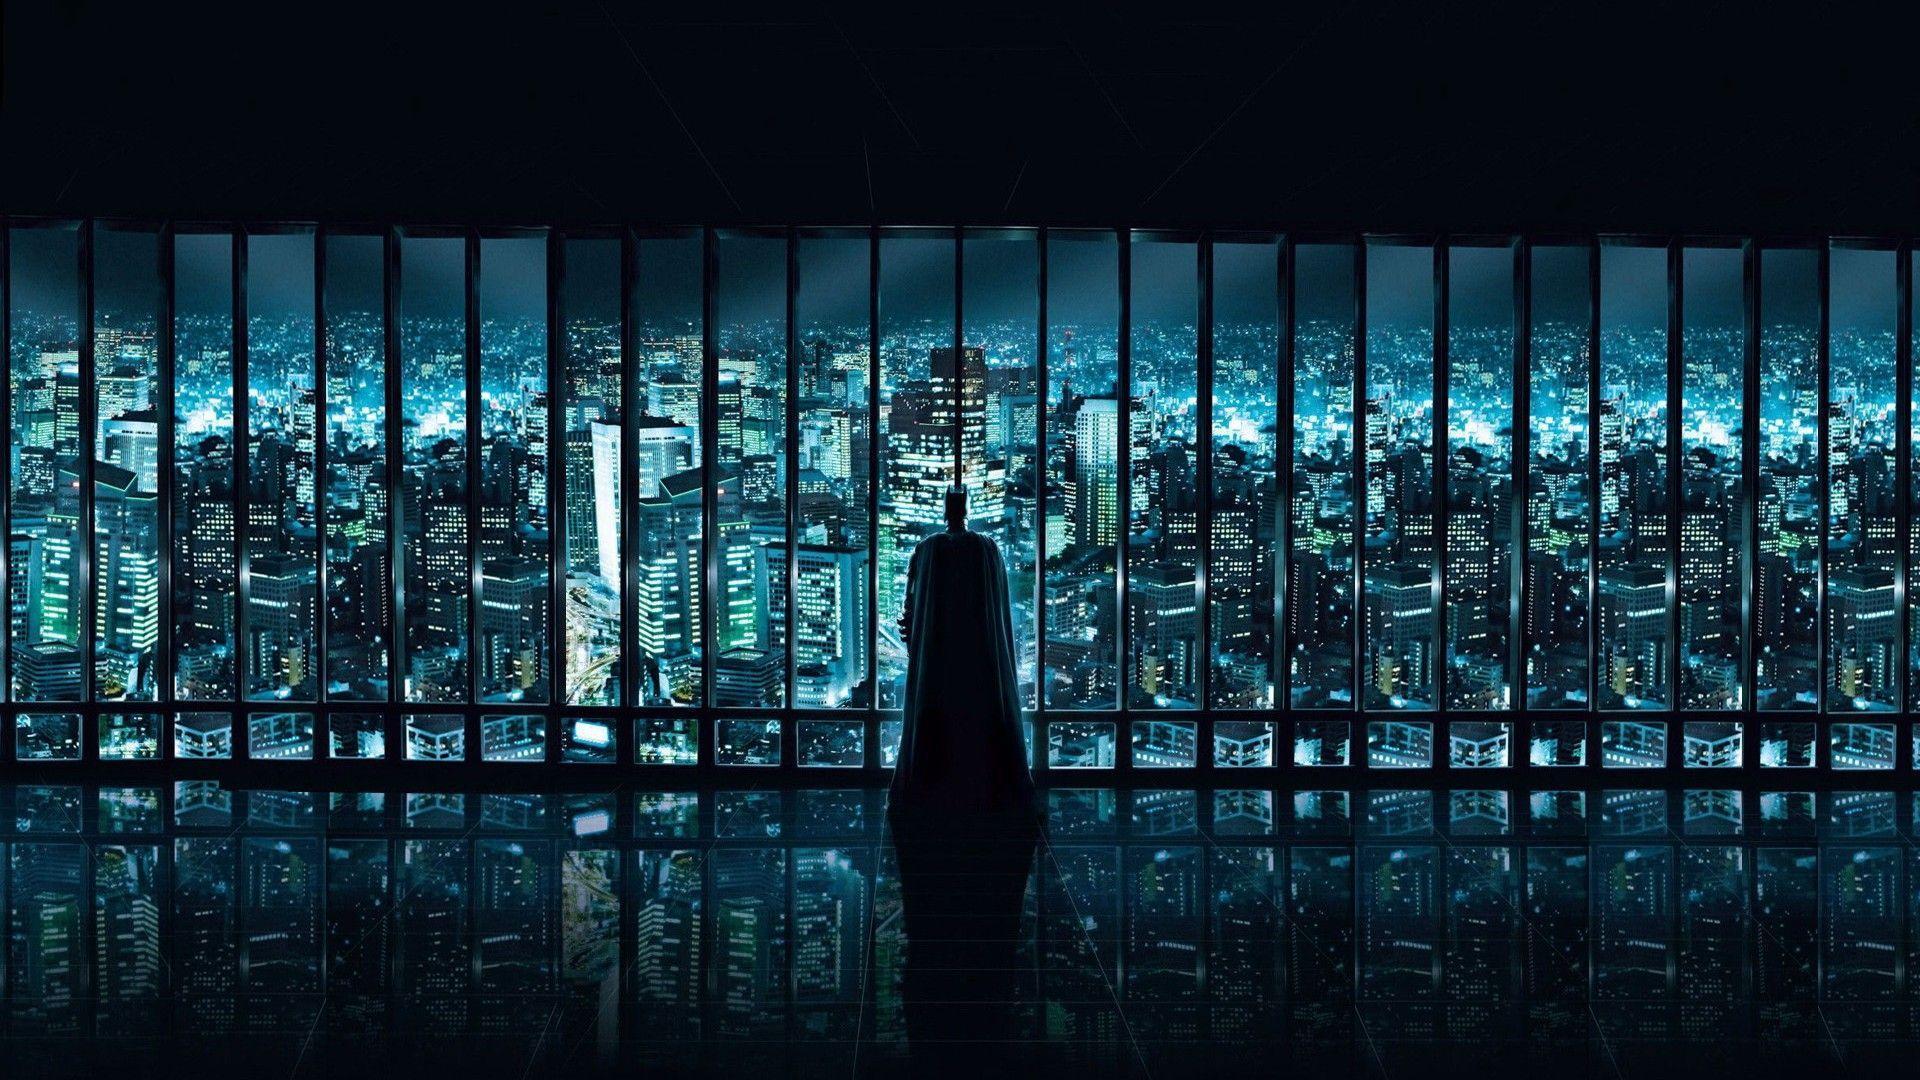 Dark Knight HD background Wallpaper. High Quality Wallpaper